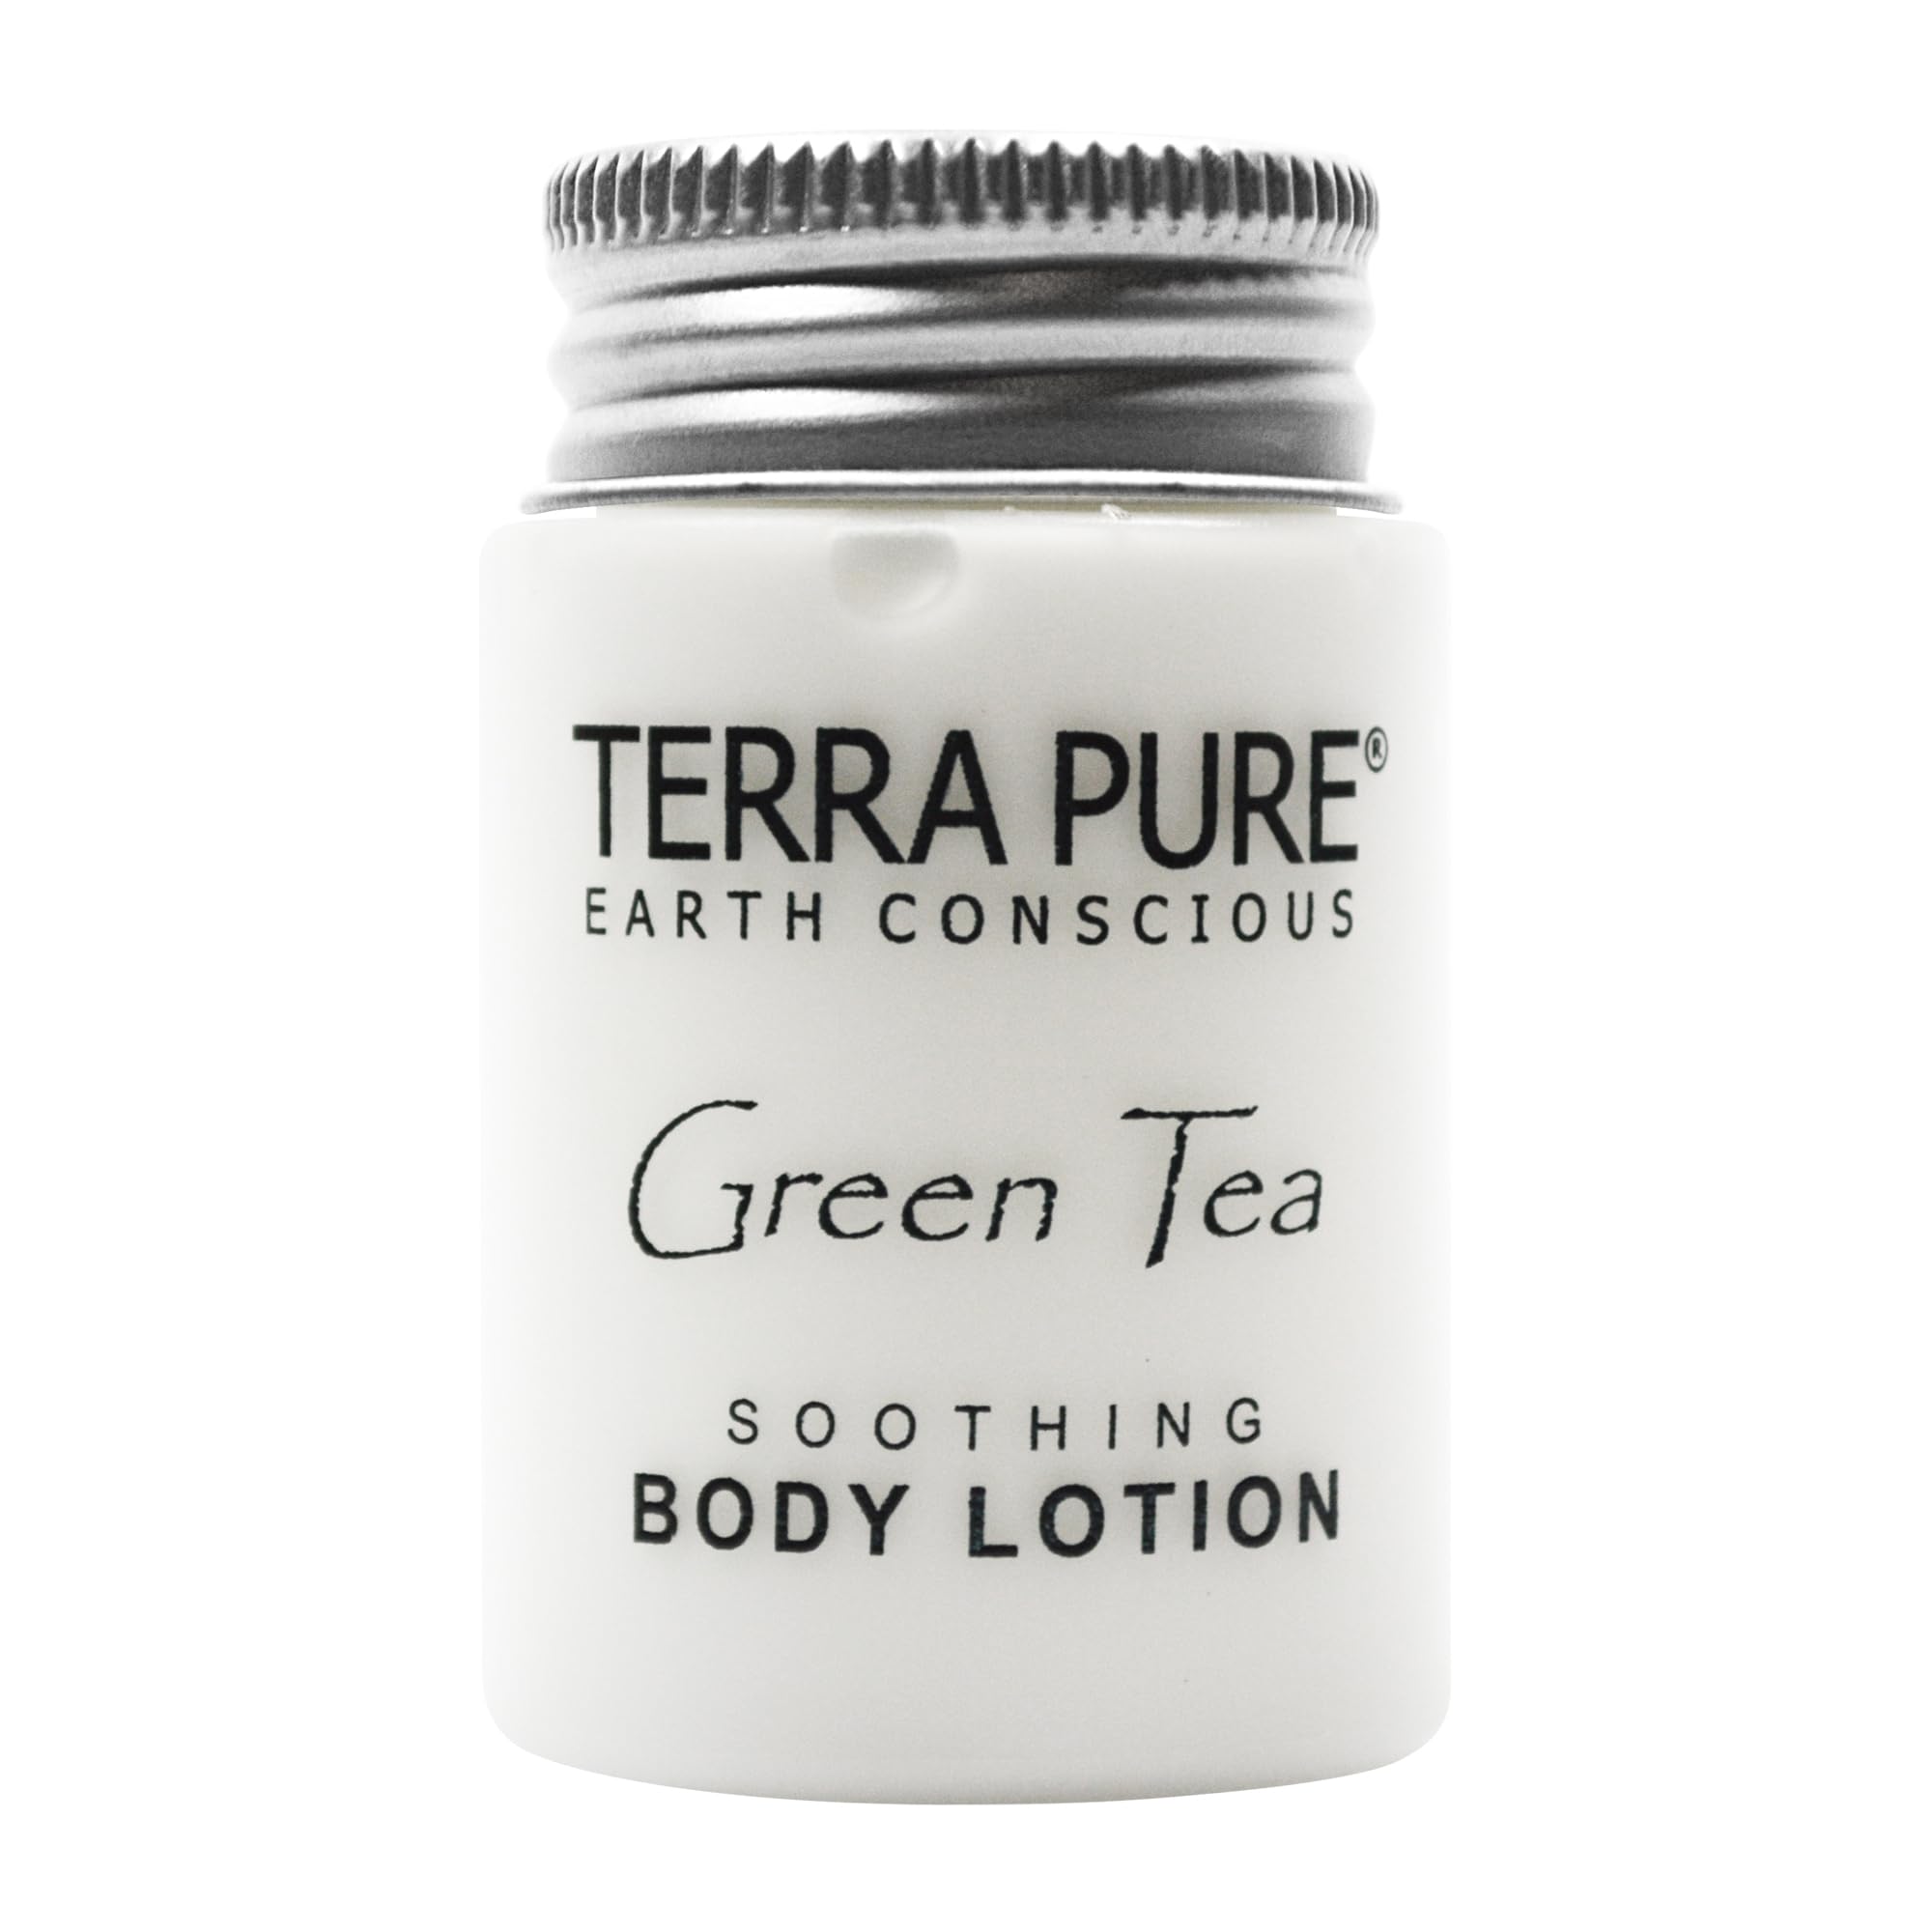 Terra Pure Lotion - 1oz Jam
Jar Nickle Cap (300/cs)